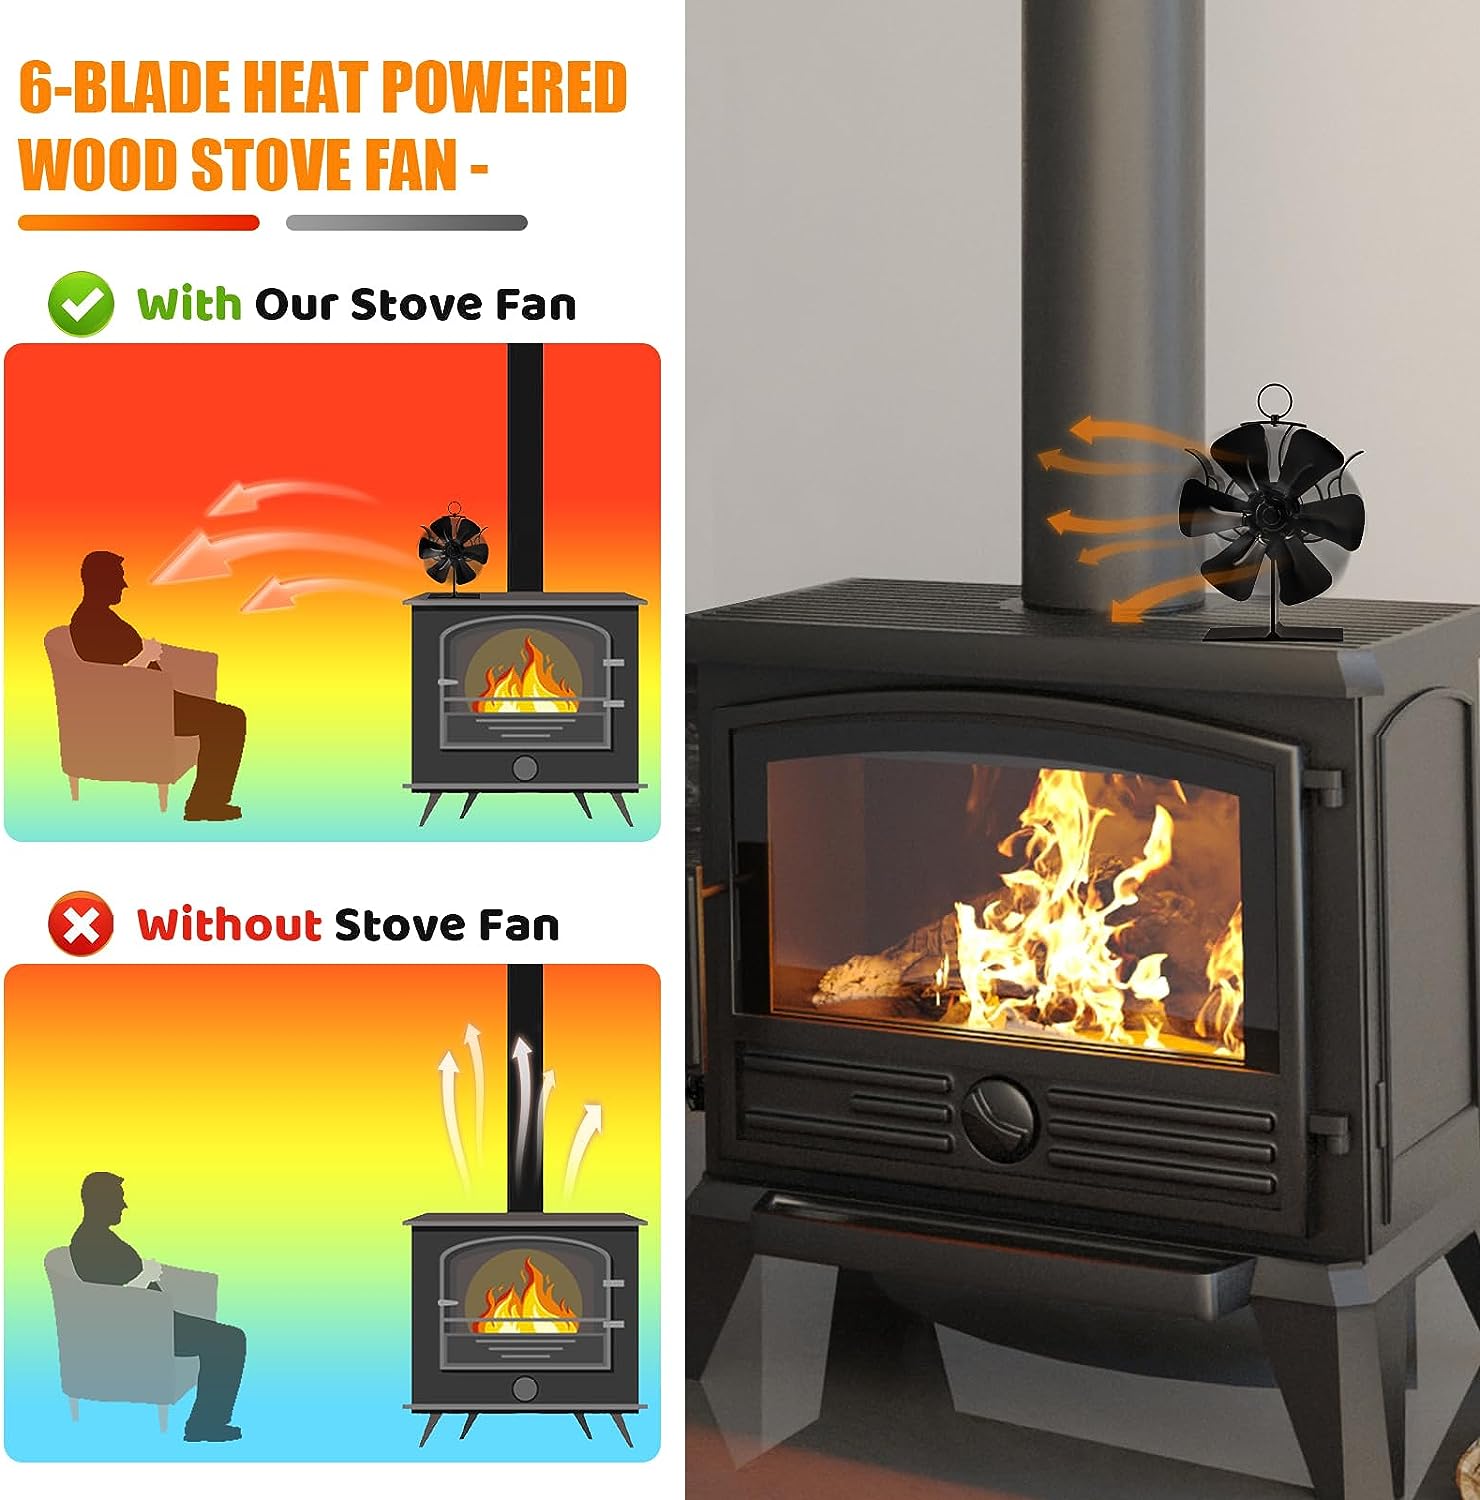 Wood Stove Fan Heat Powered for Wood Stove/Log Burner/Fireplace